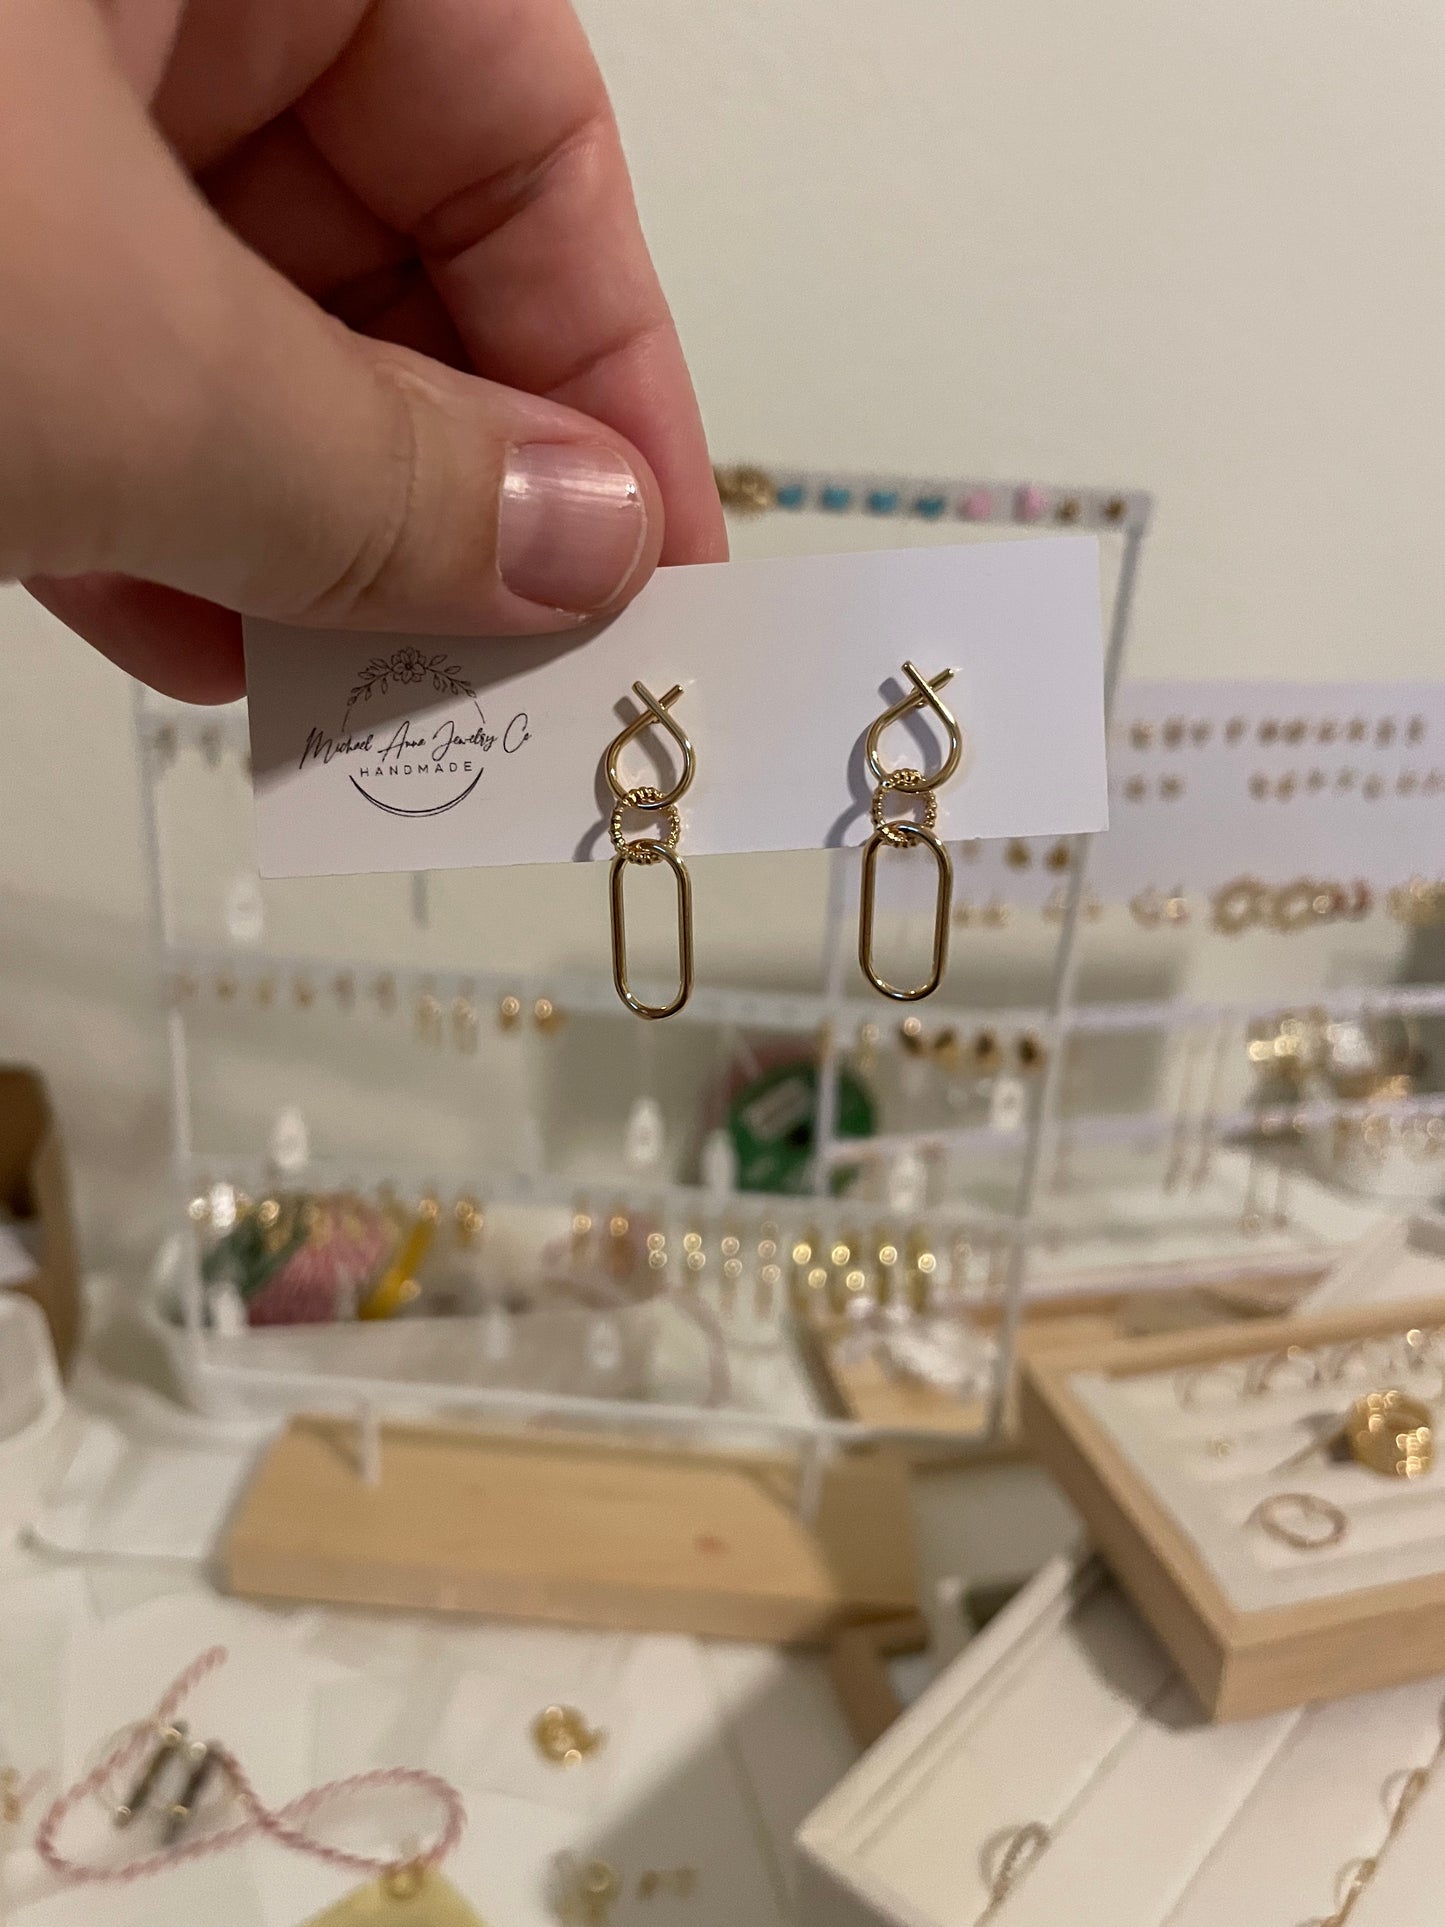 Gold filled earrings